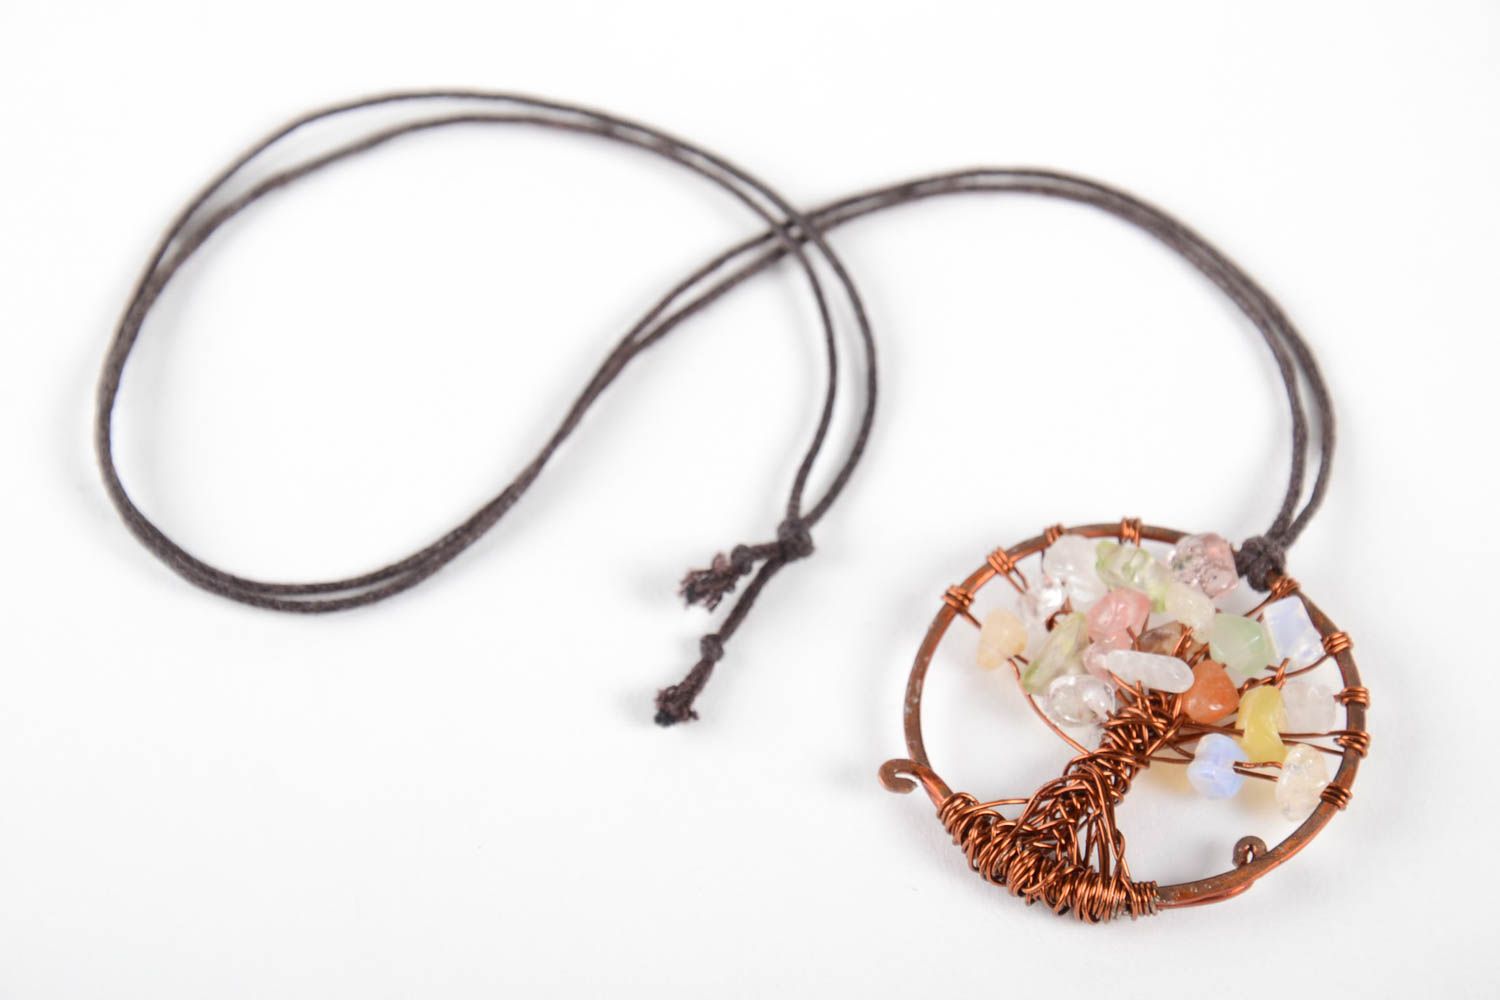 Handmade pendant designer accessory copper jewelry pendant with natural stones photo 4